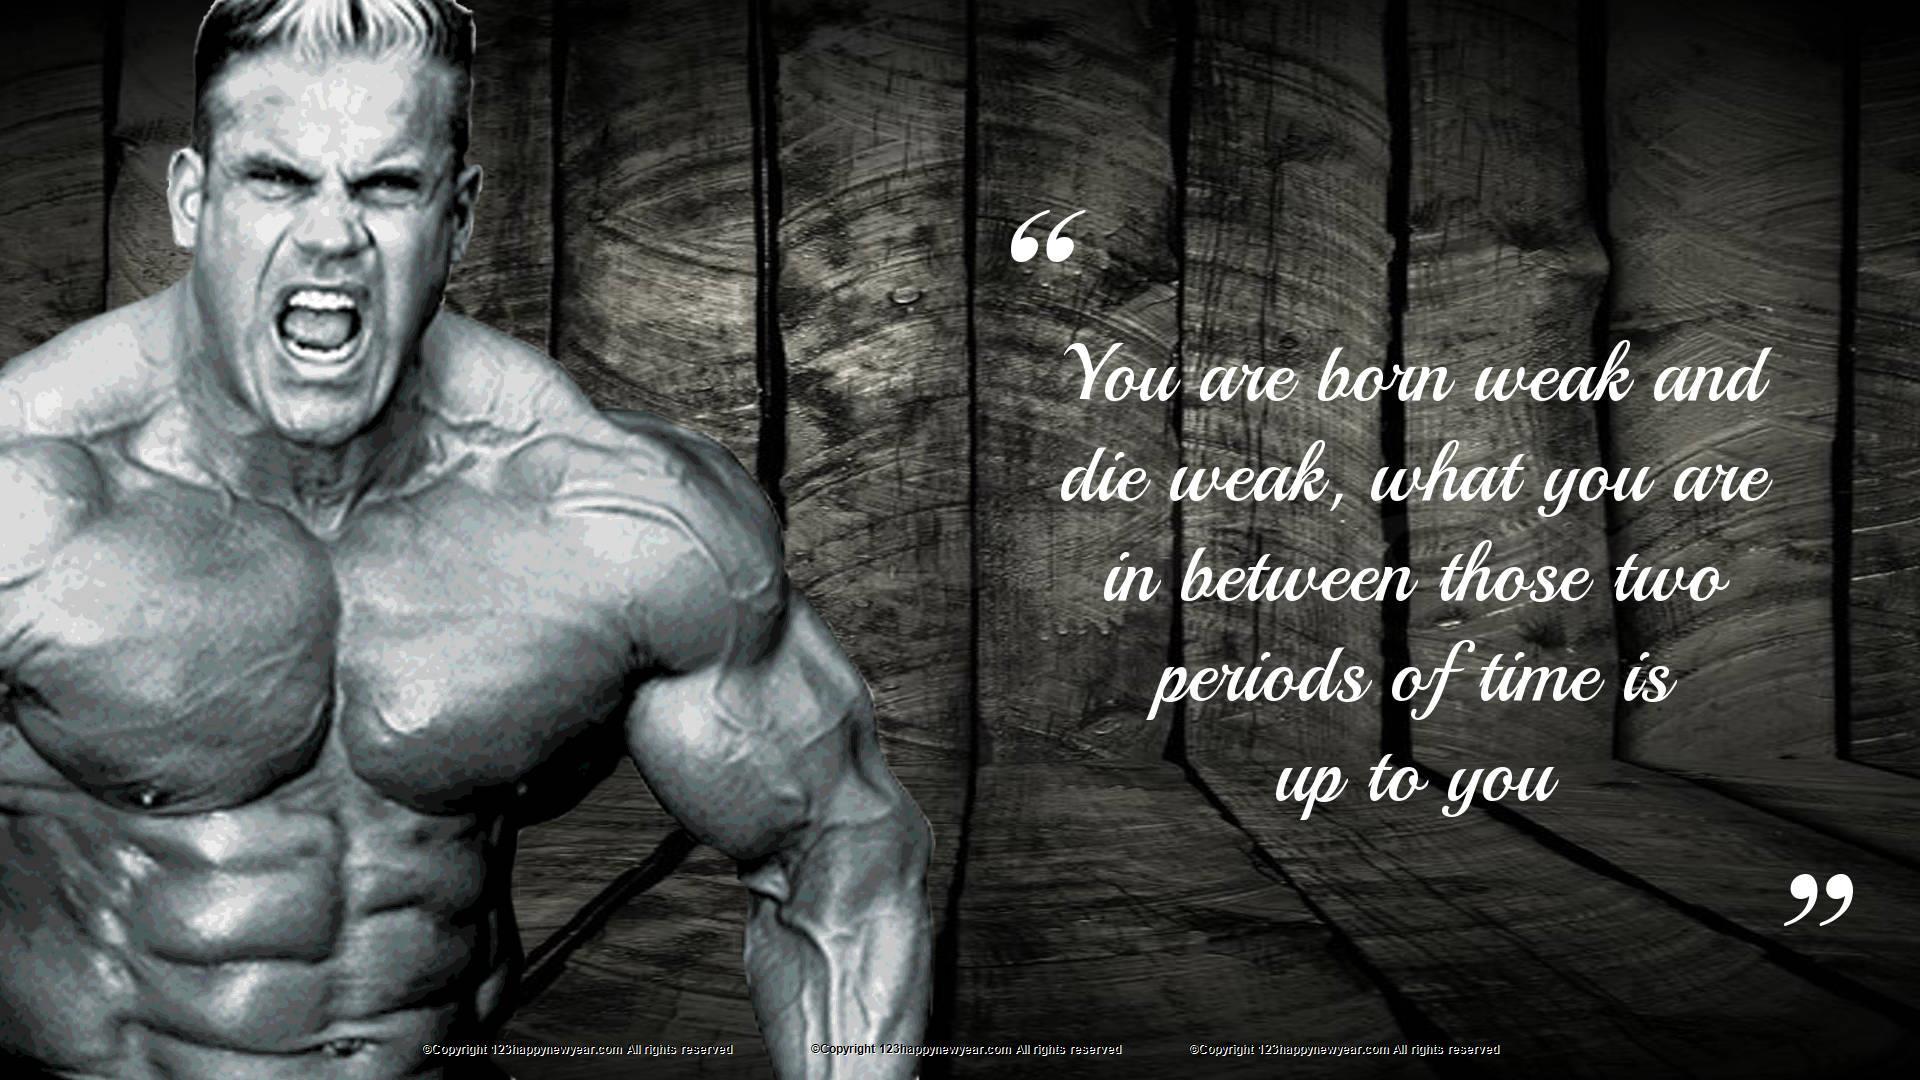 Bodybuilding gym workouts wallpaper